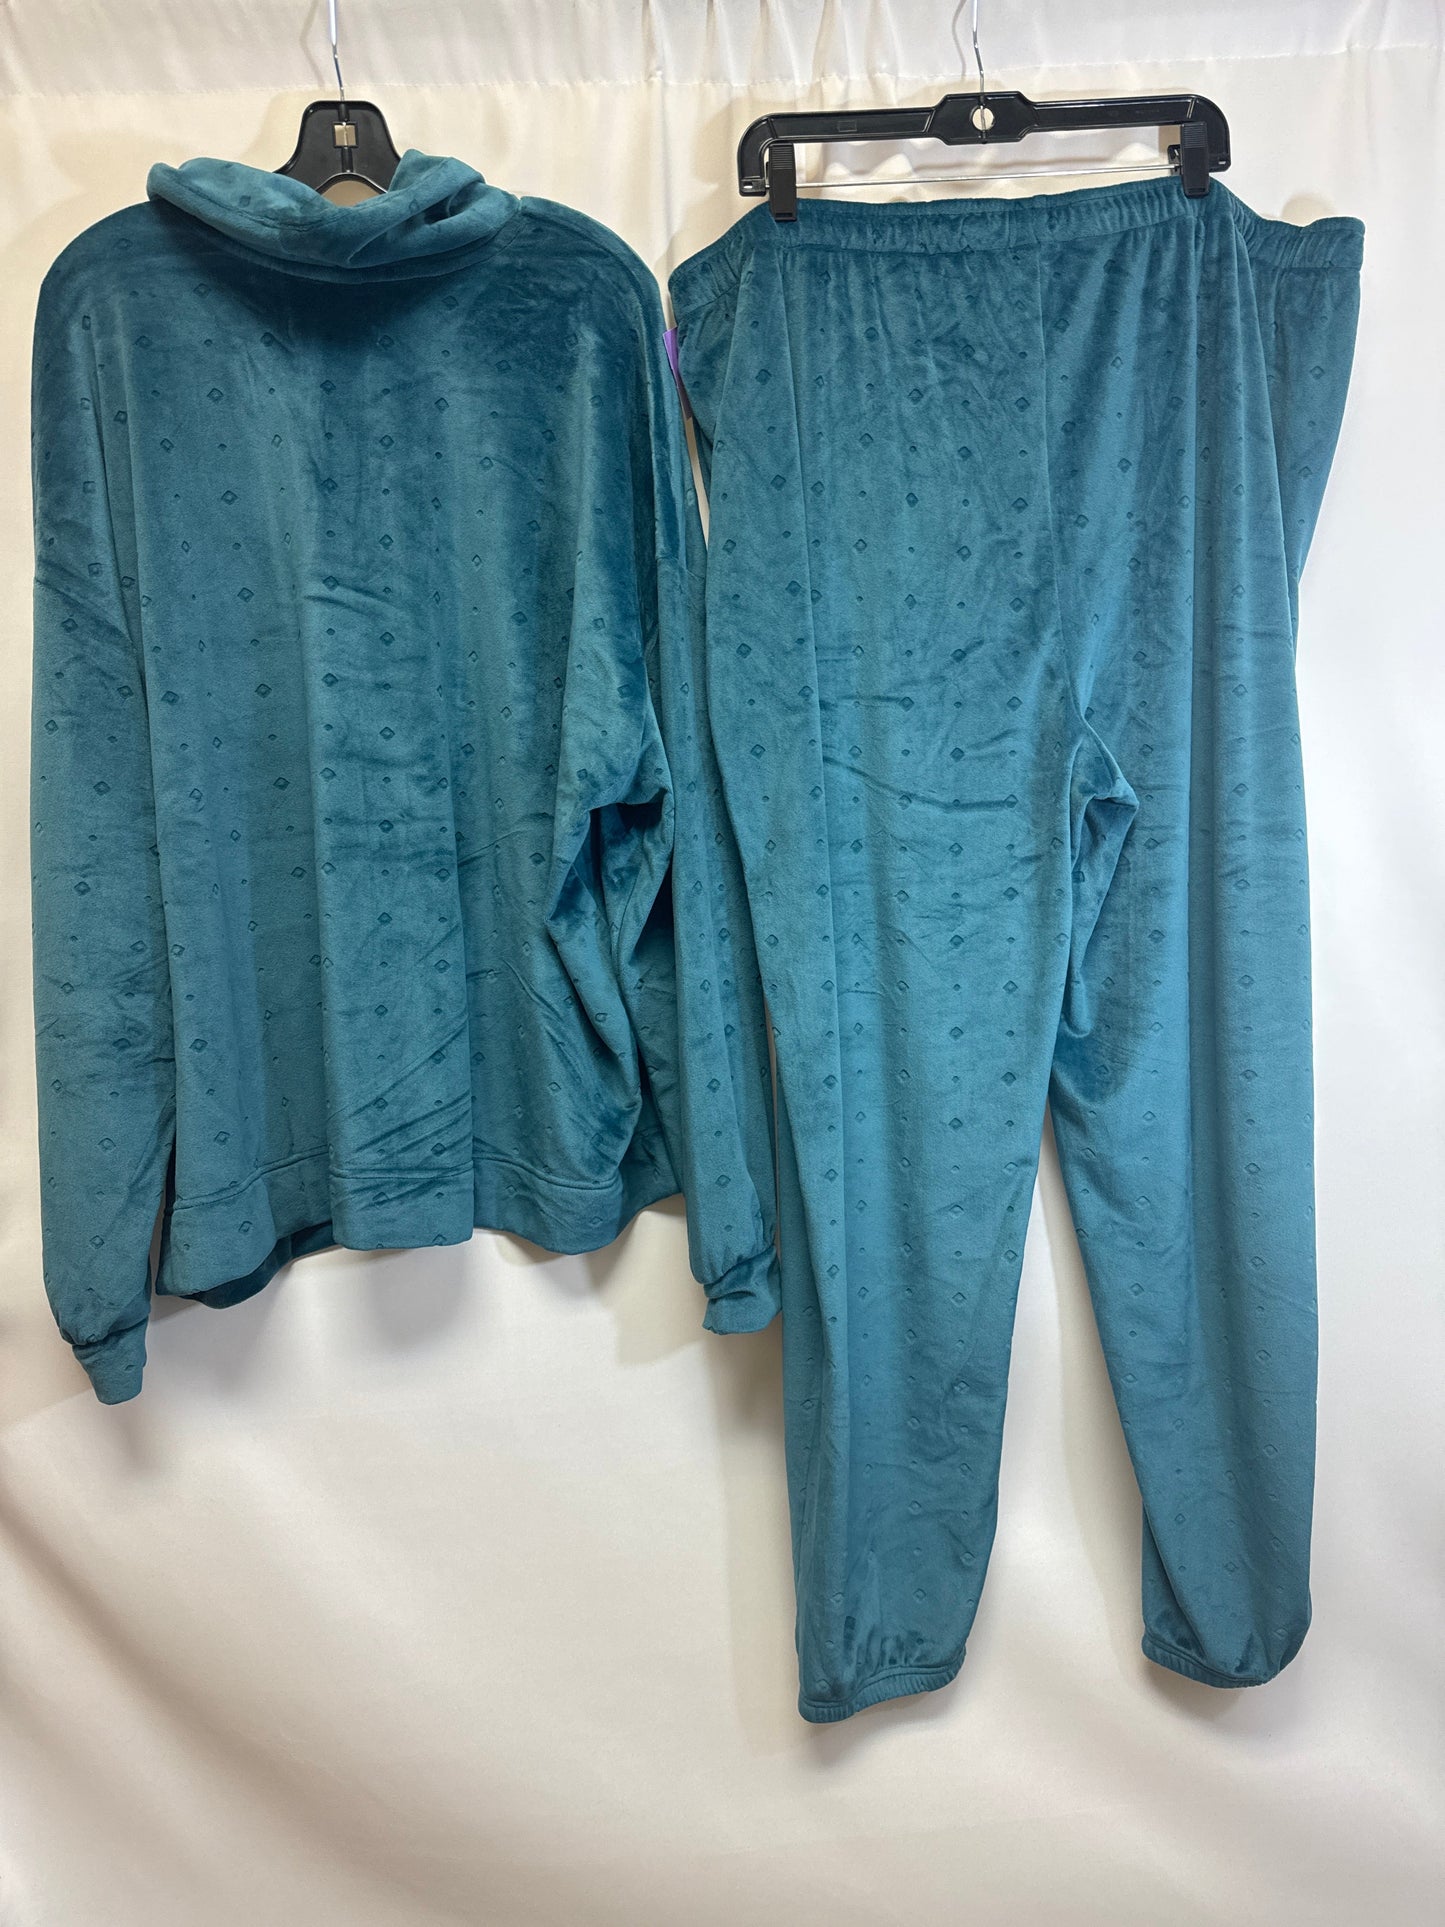 Blue Athletic Pants 2pc Carole Hochman, Size 3x